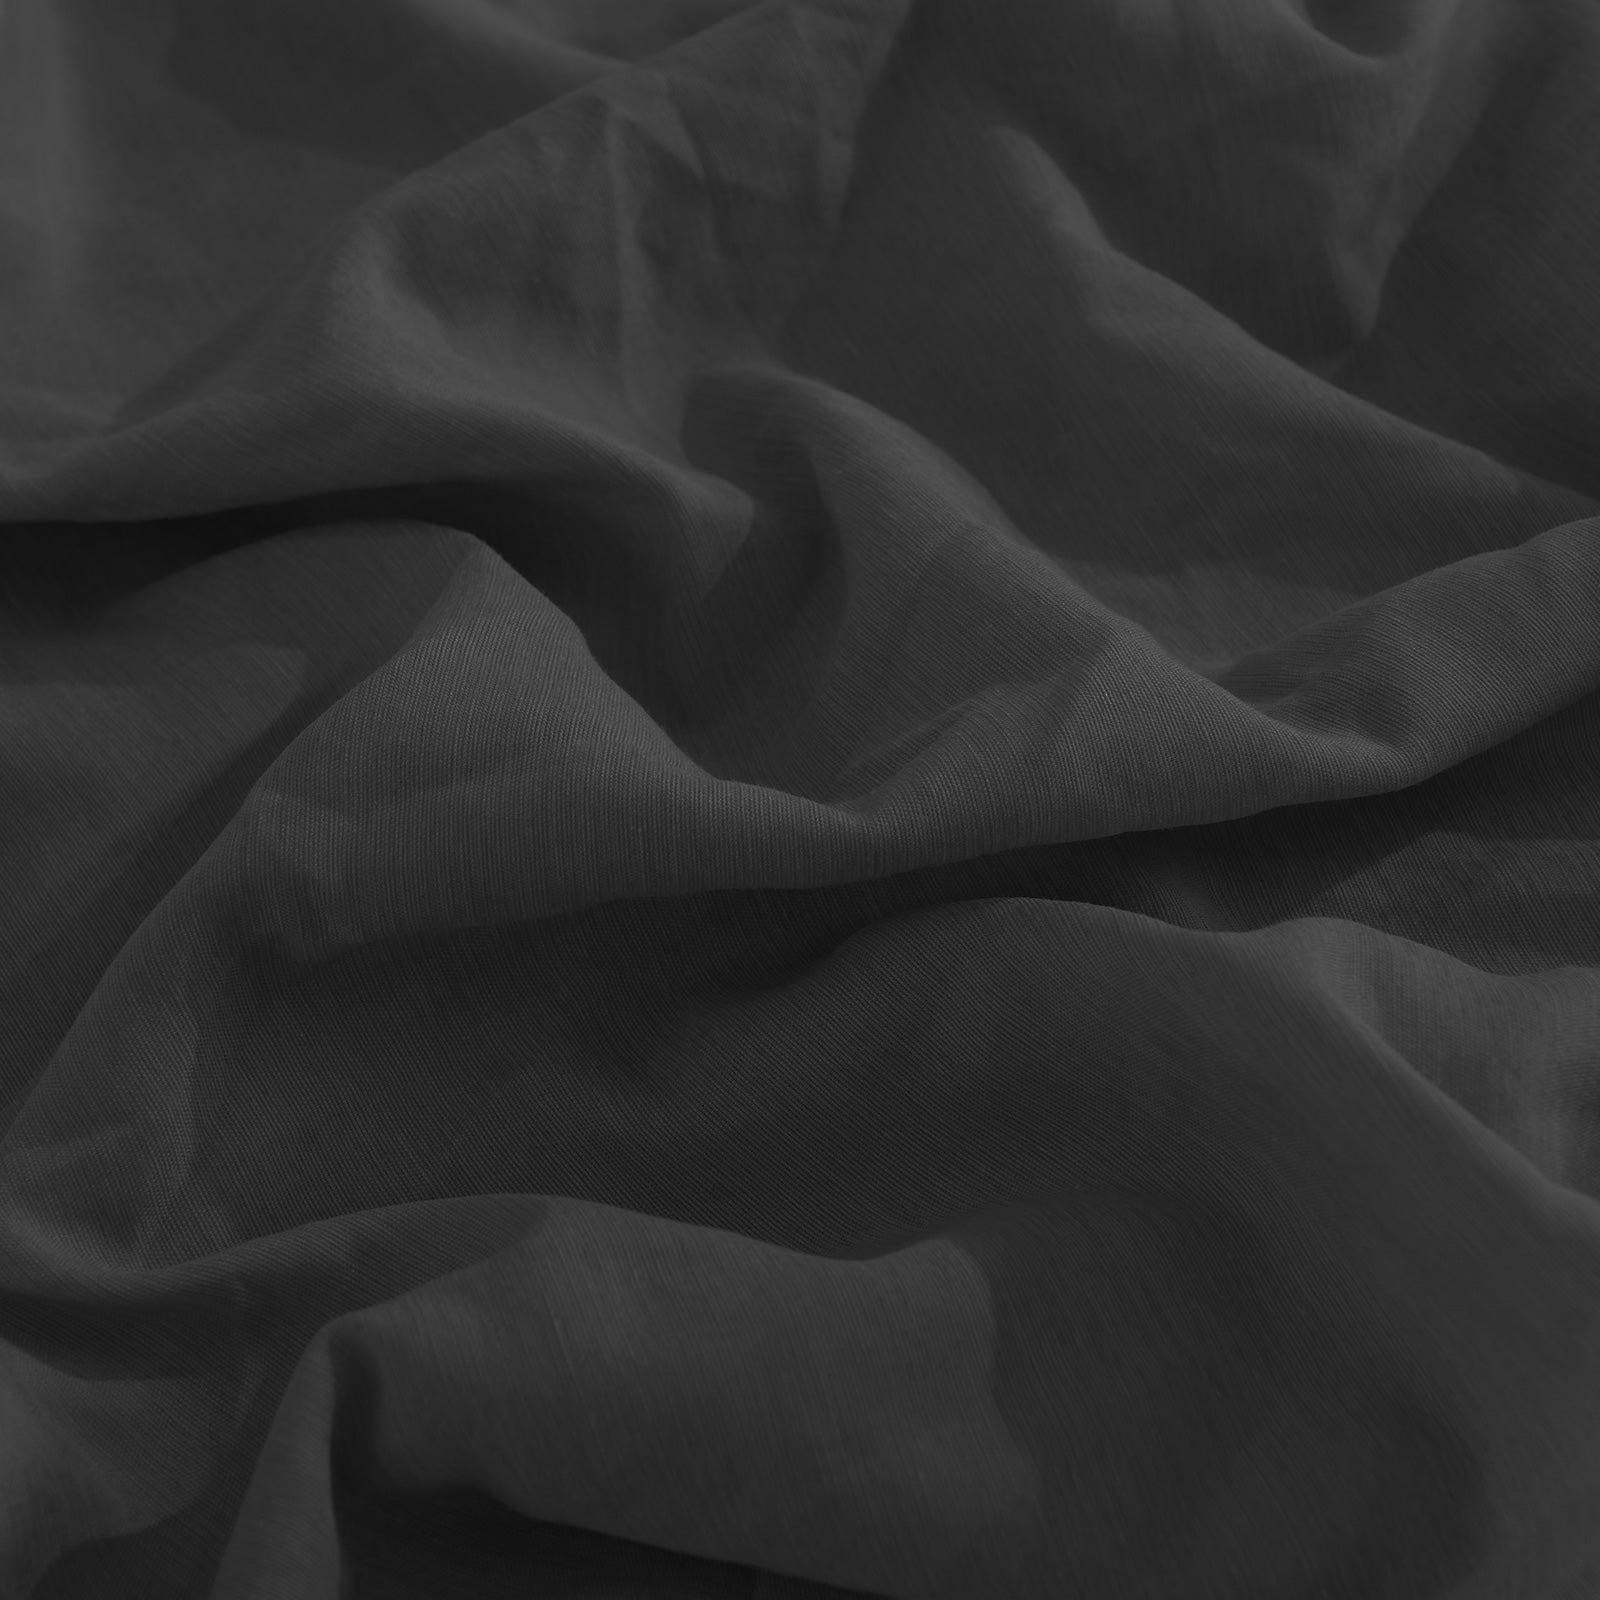 Royal Comfort Flax Linen Blend Sheet Set Bedding Luxury Breathable Ultra Soft Charcoal King Deals499